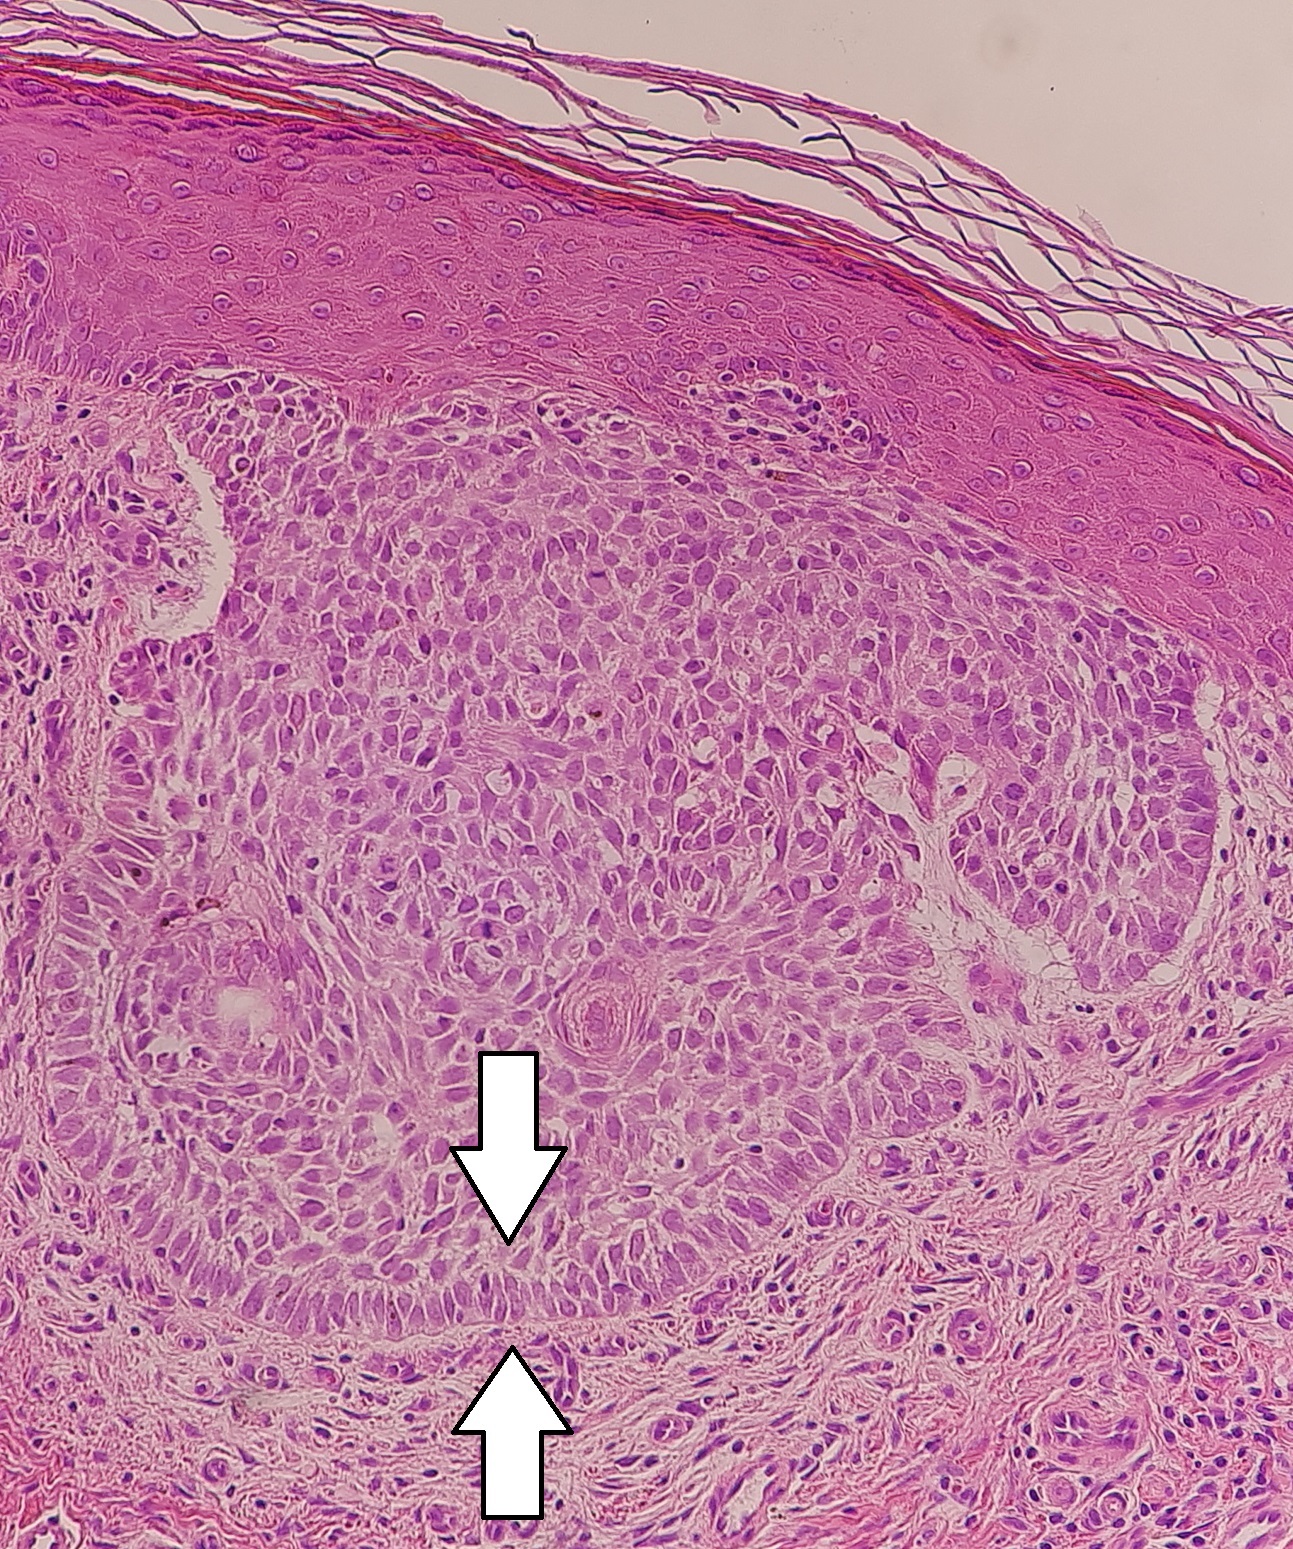 Palisading of keratinocytes in nodular basal cell cancer